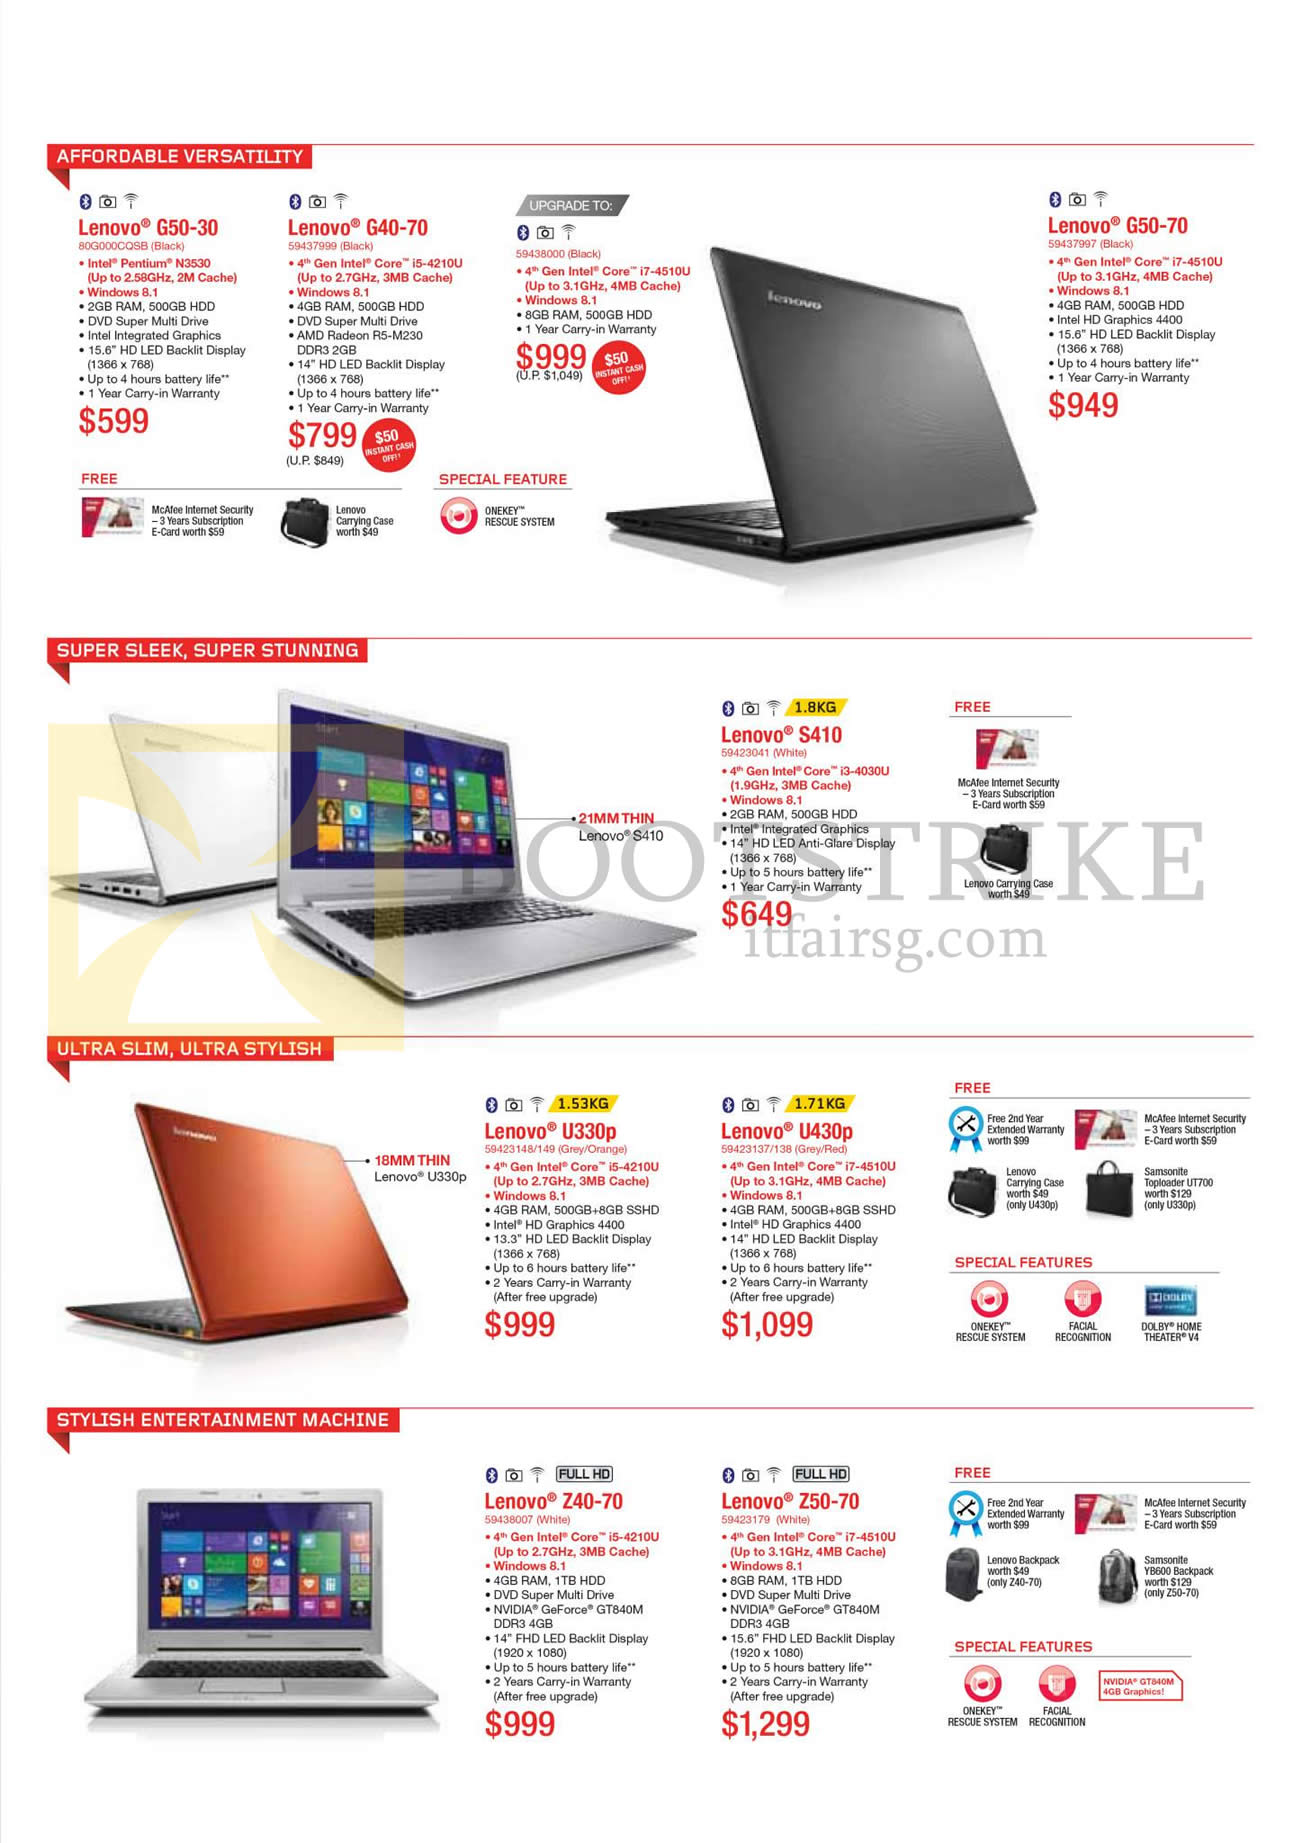 SITEX 2014 price list image brochure of Lenovo Notebooks G50-30, G40-70, G50-70, S410, U330p, U430p, Z40-70, Z50-70